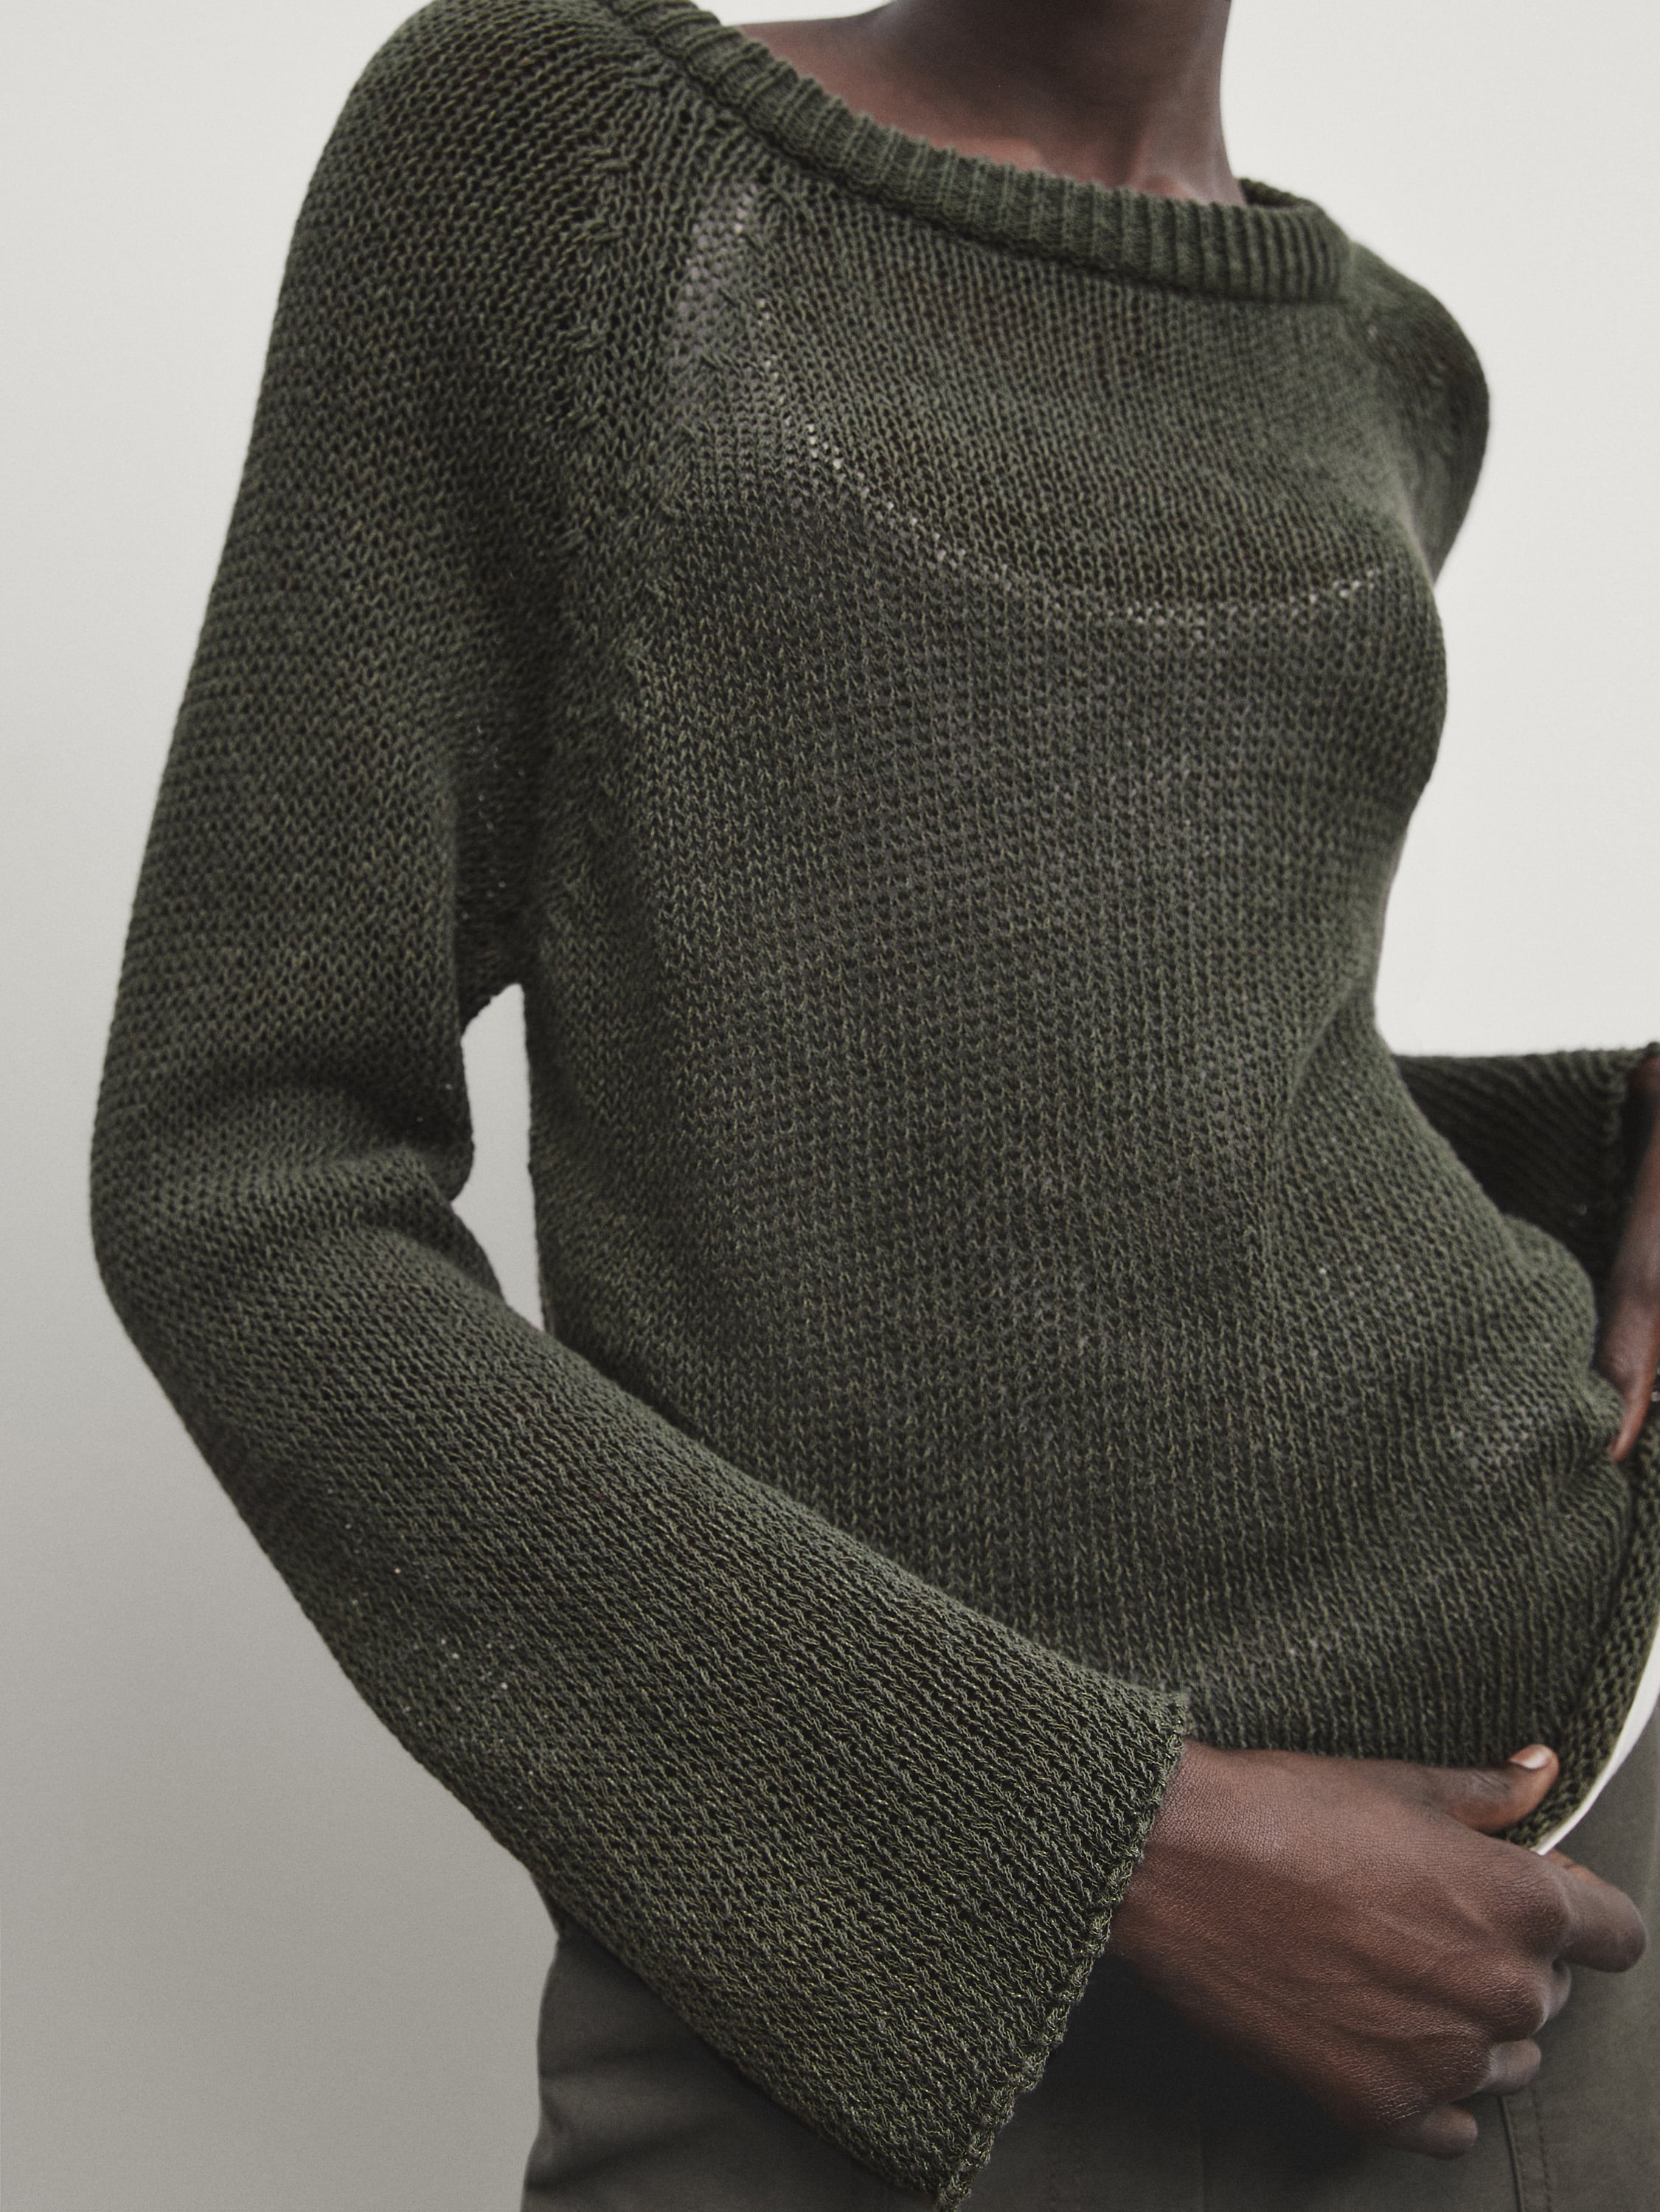 Cotton blend knit sweater crew neck